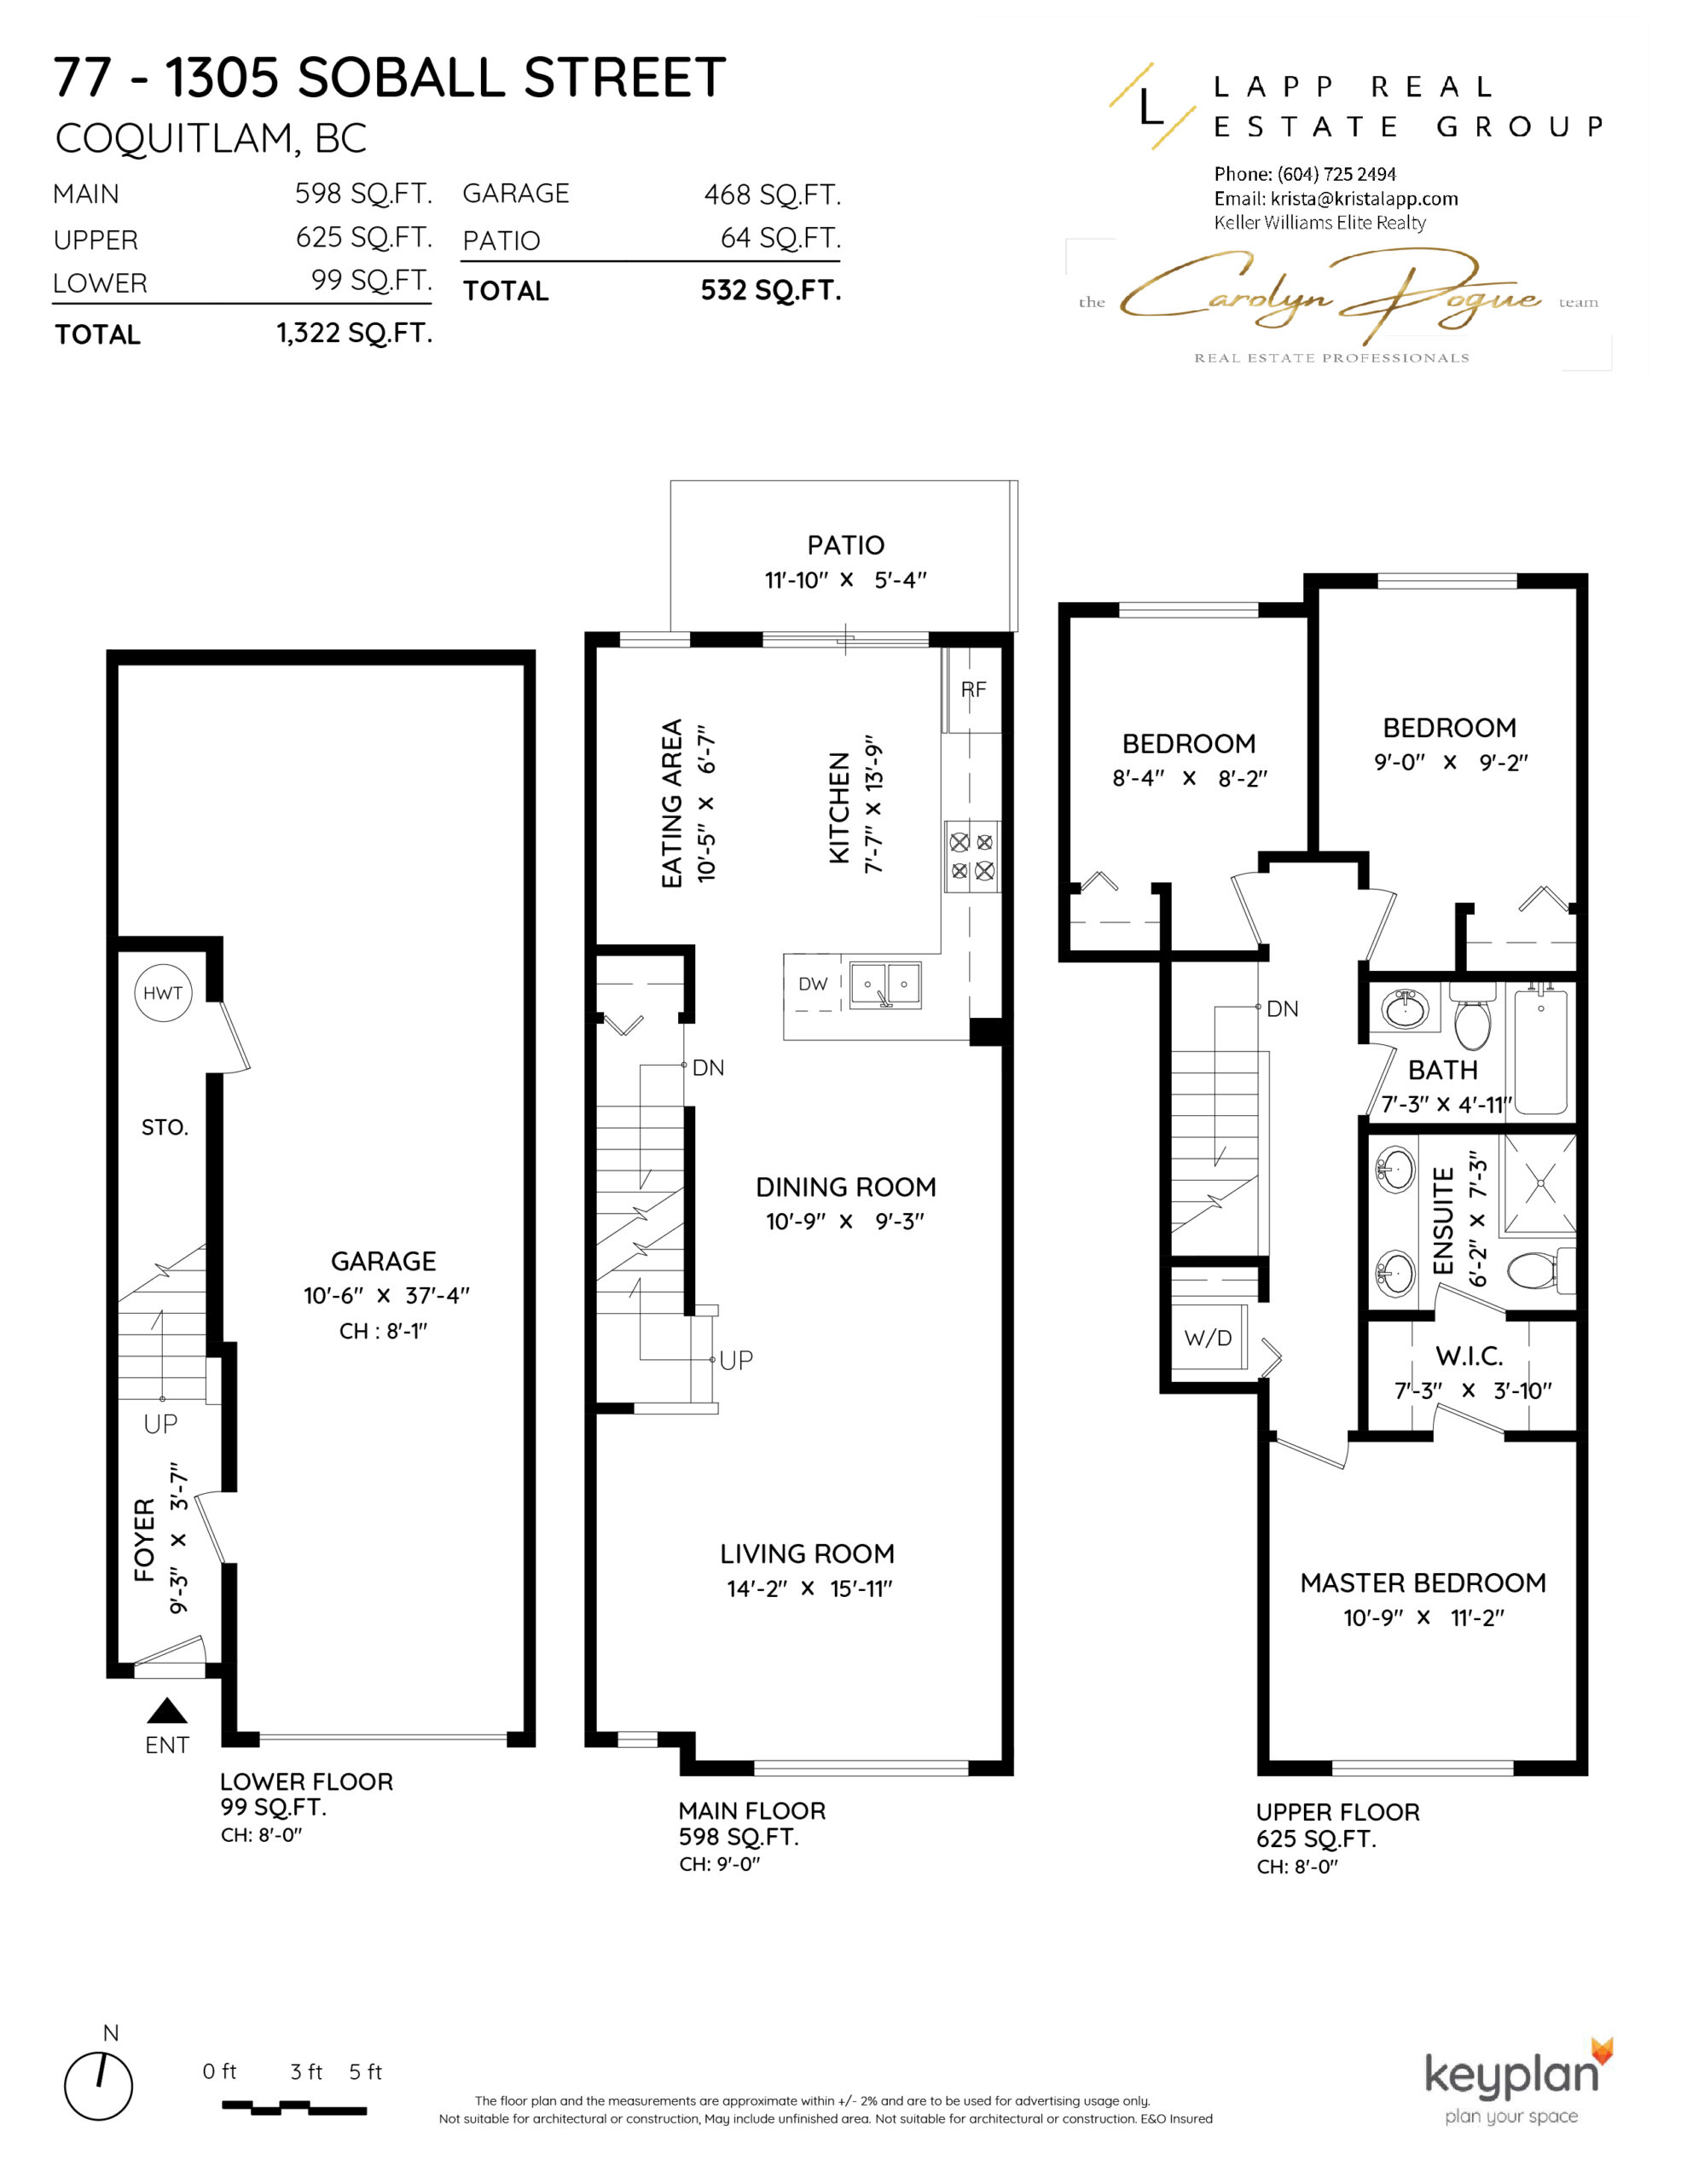 Krista Lapp Top Burke Mountain Coquitlam Realtor Unit 77 1305 Soball Street Coquitlam BC Floor Plan